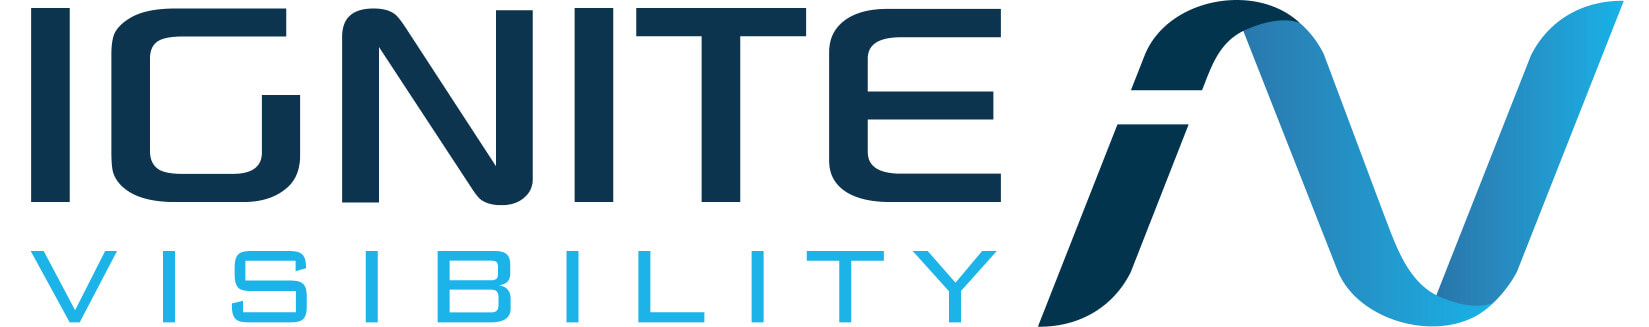 Best Global SEO Business Logo: Ignite Visibility